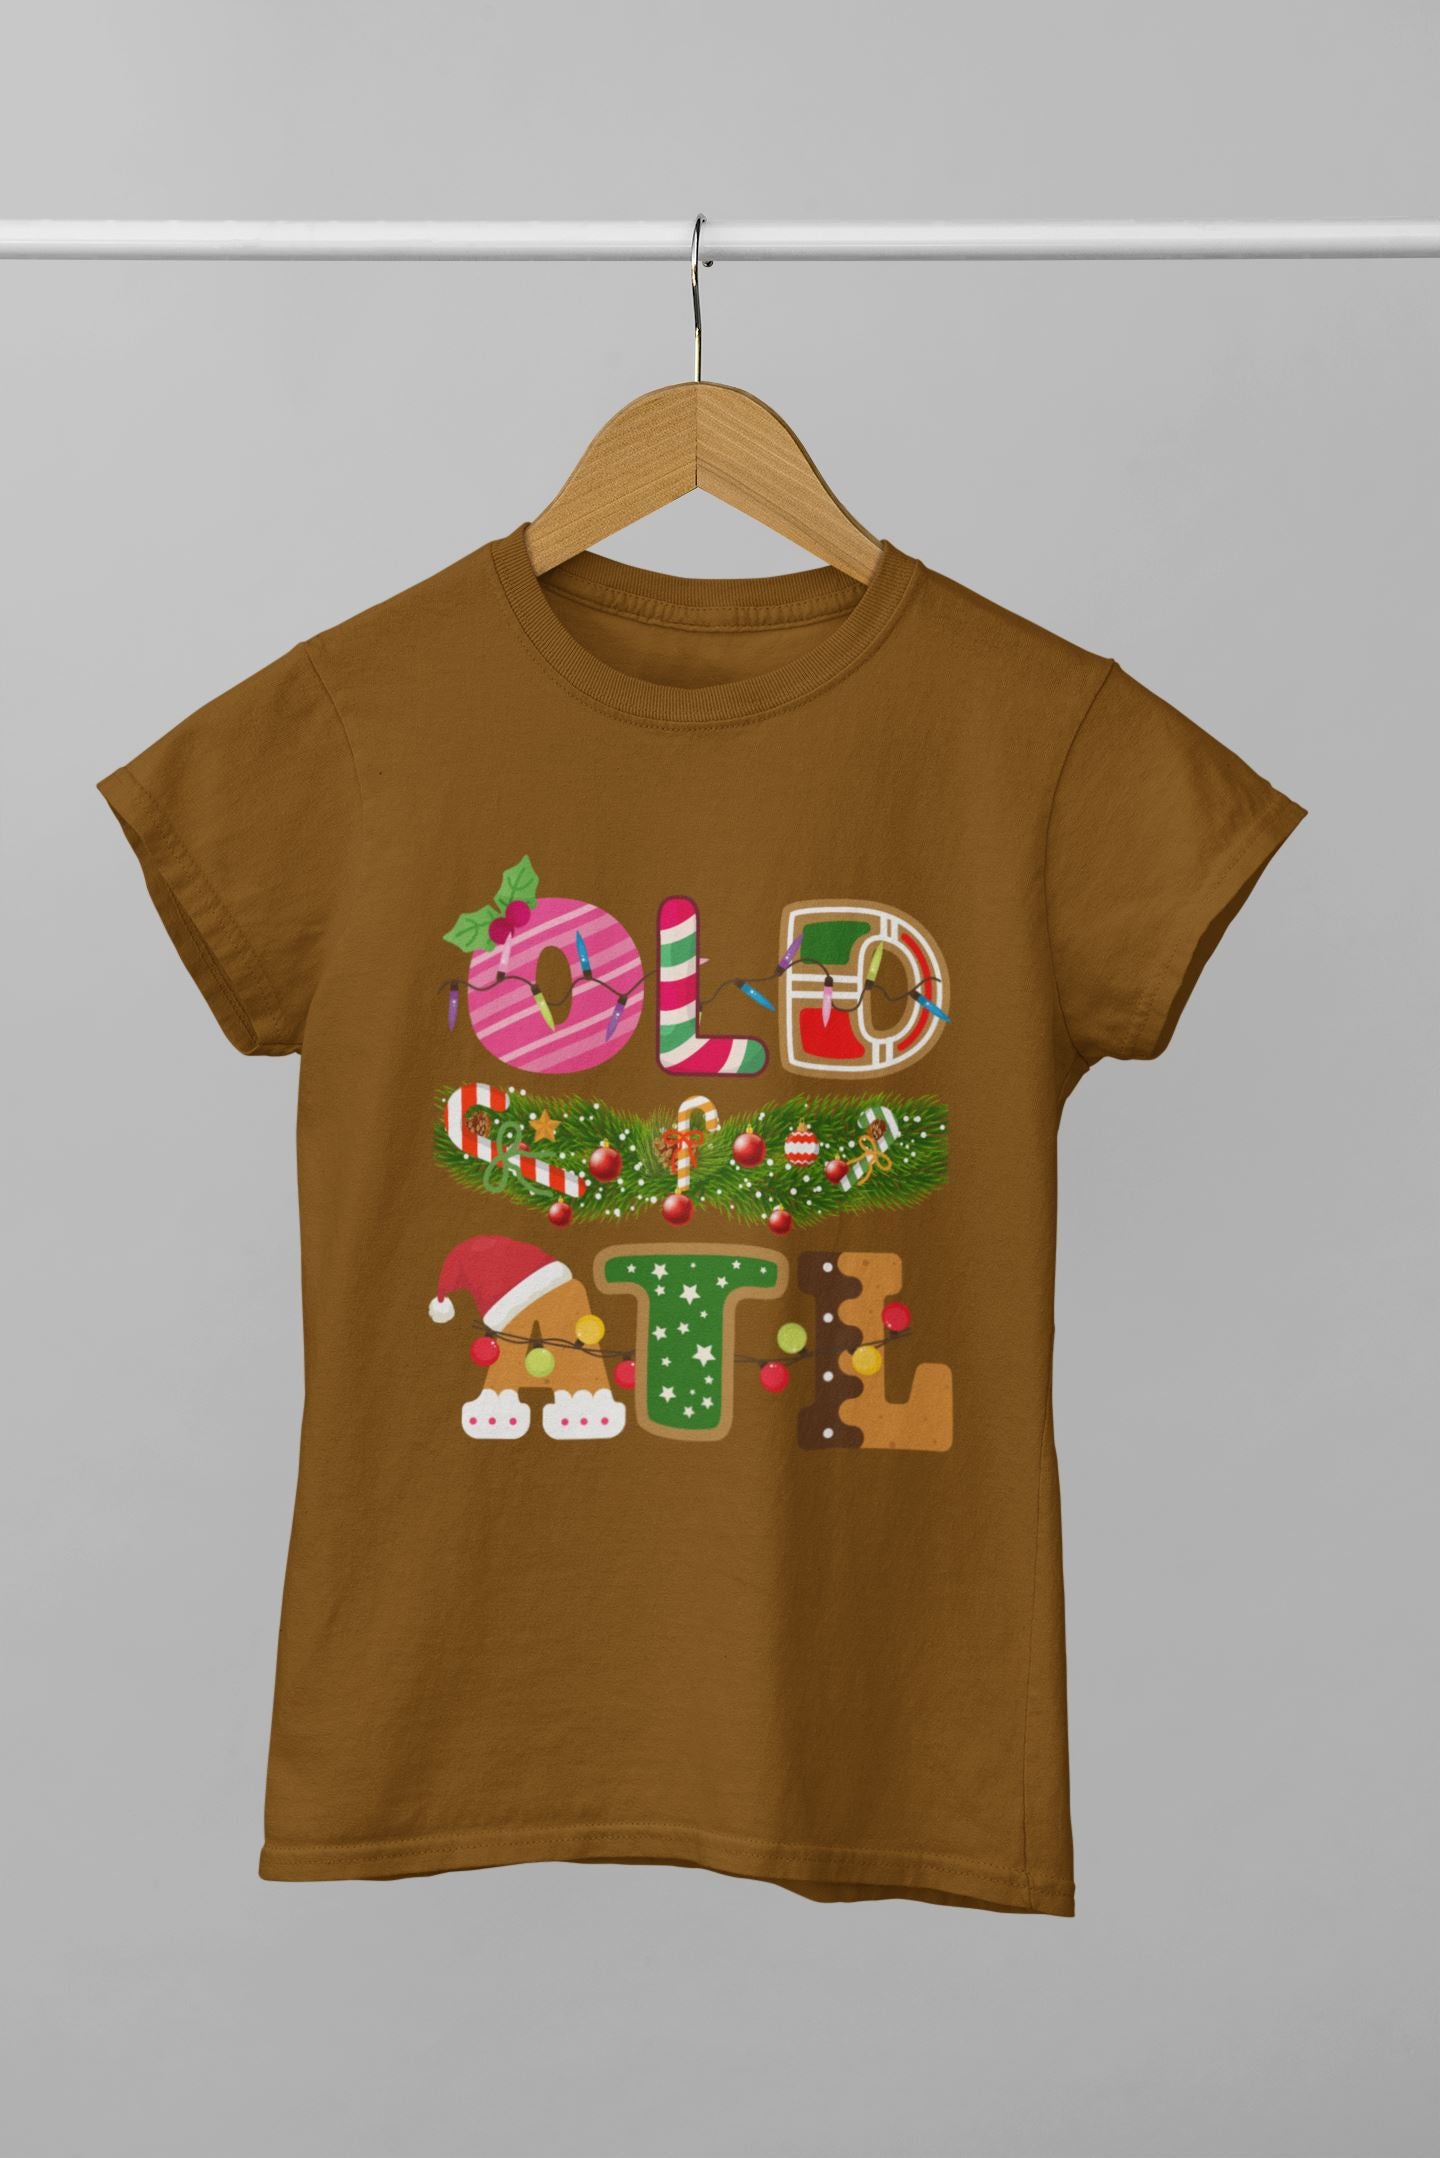 OLD ATL Holiday T-Shirt (Ugly Christmas Shirt) B1ack By Design LLC 